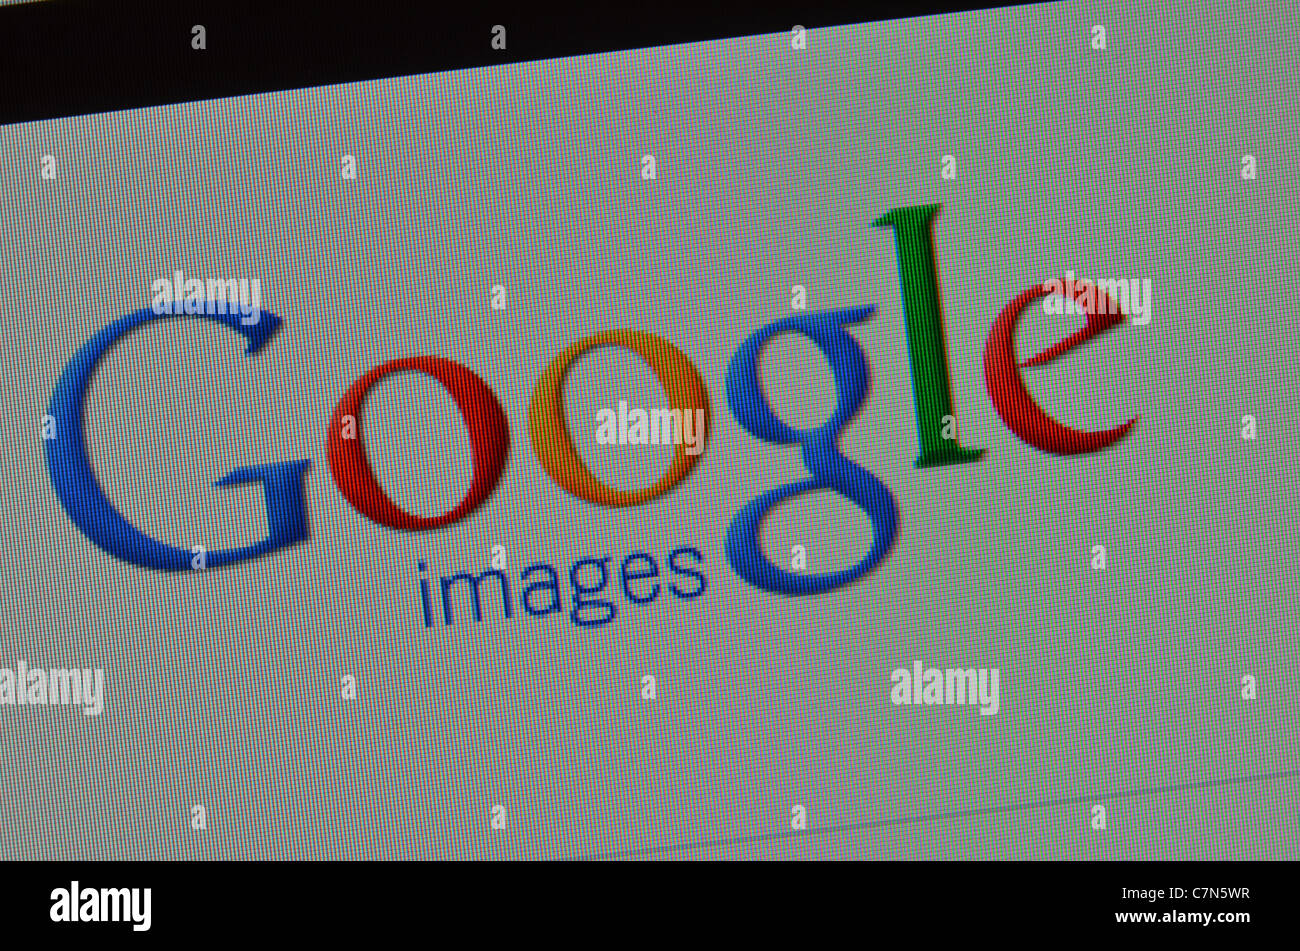 Google Images screenshot Stock Photo